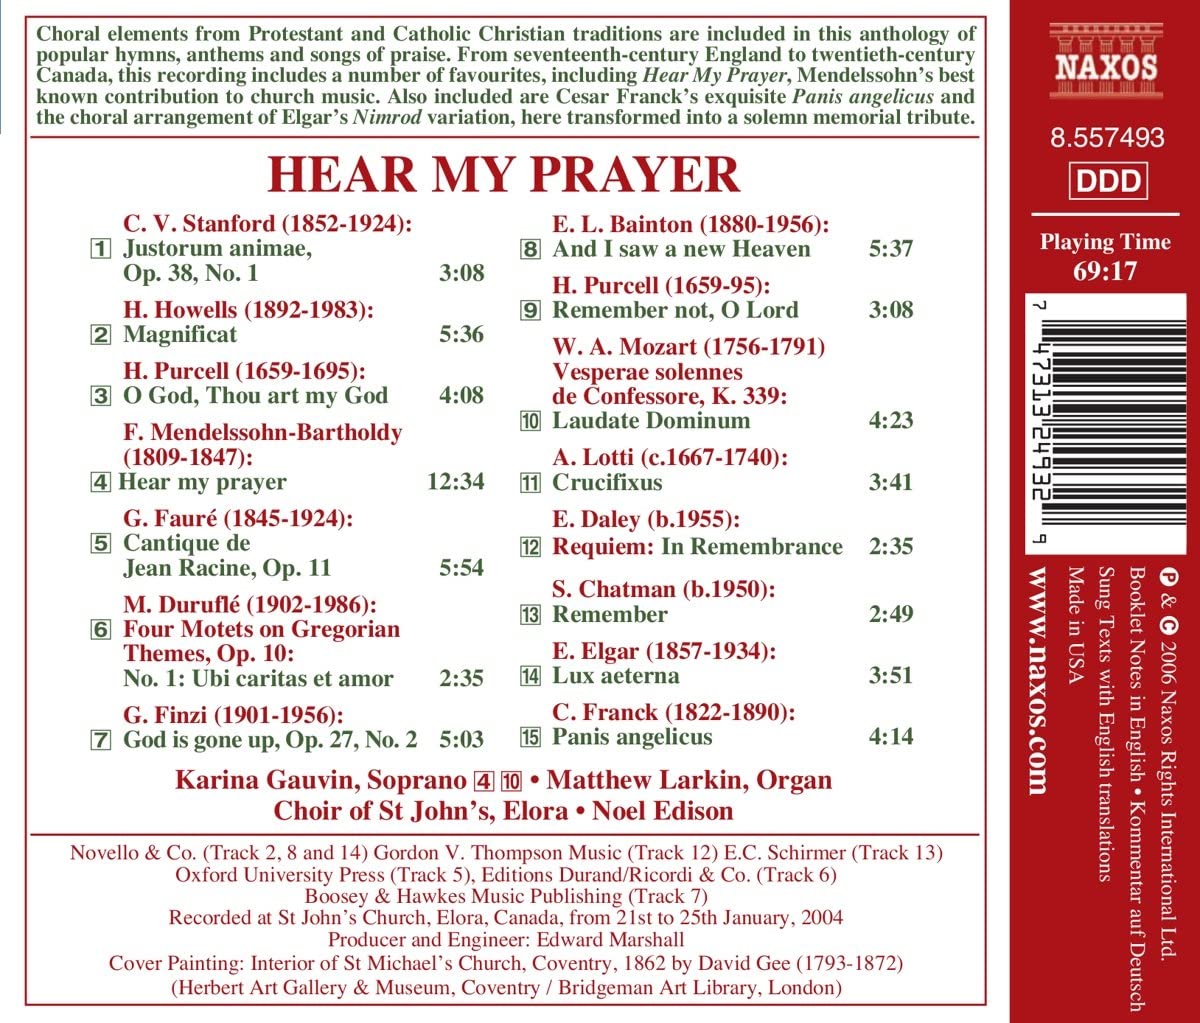 HEAR MY PRAYER - Hymns and Anthems - slide-1